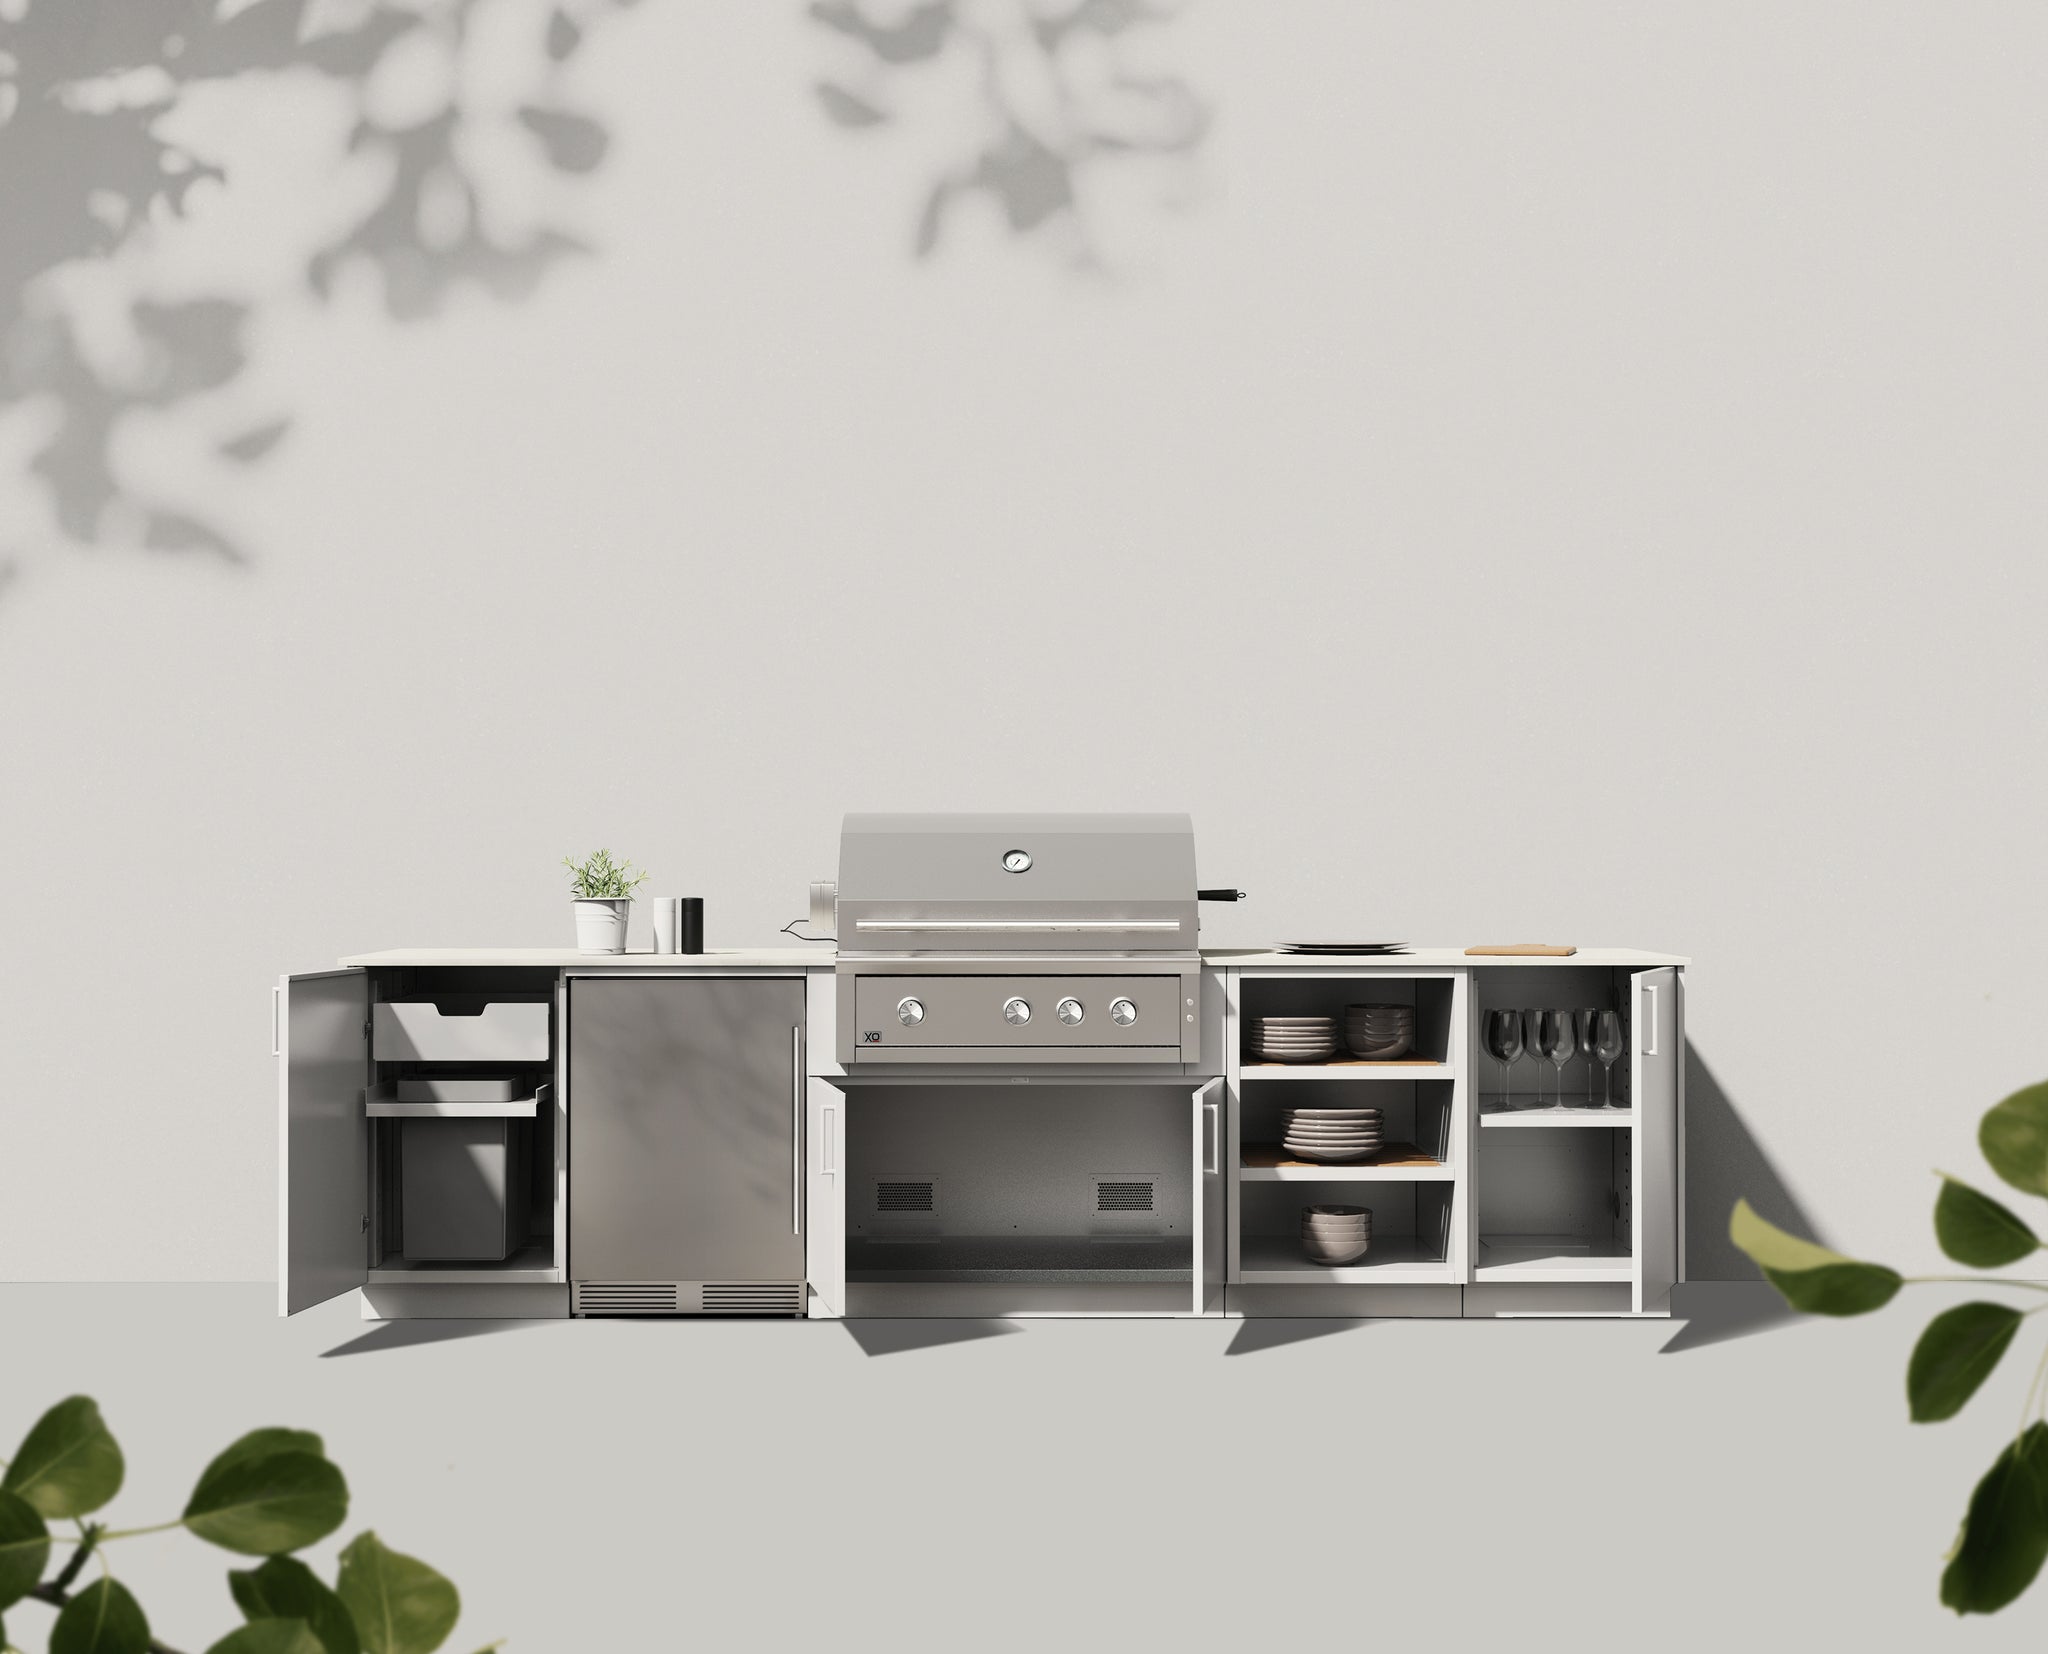 Grill, Refrigeration & Functional Storage Outdoor Kitchen Series